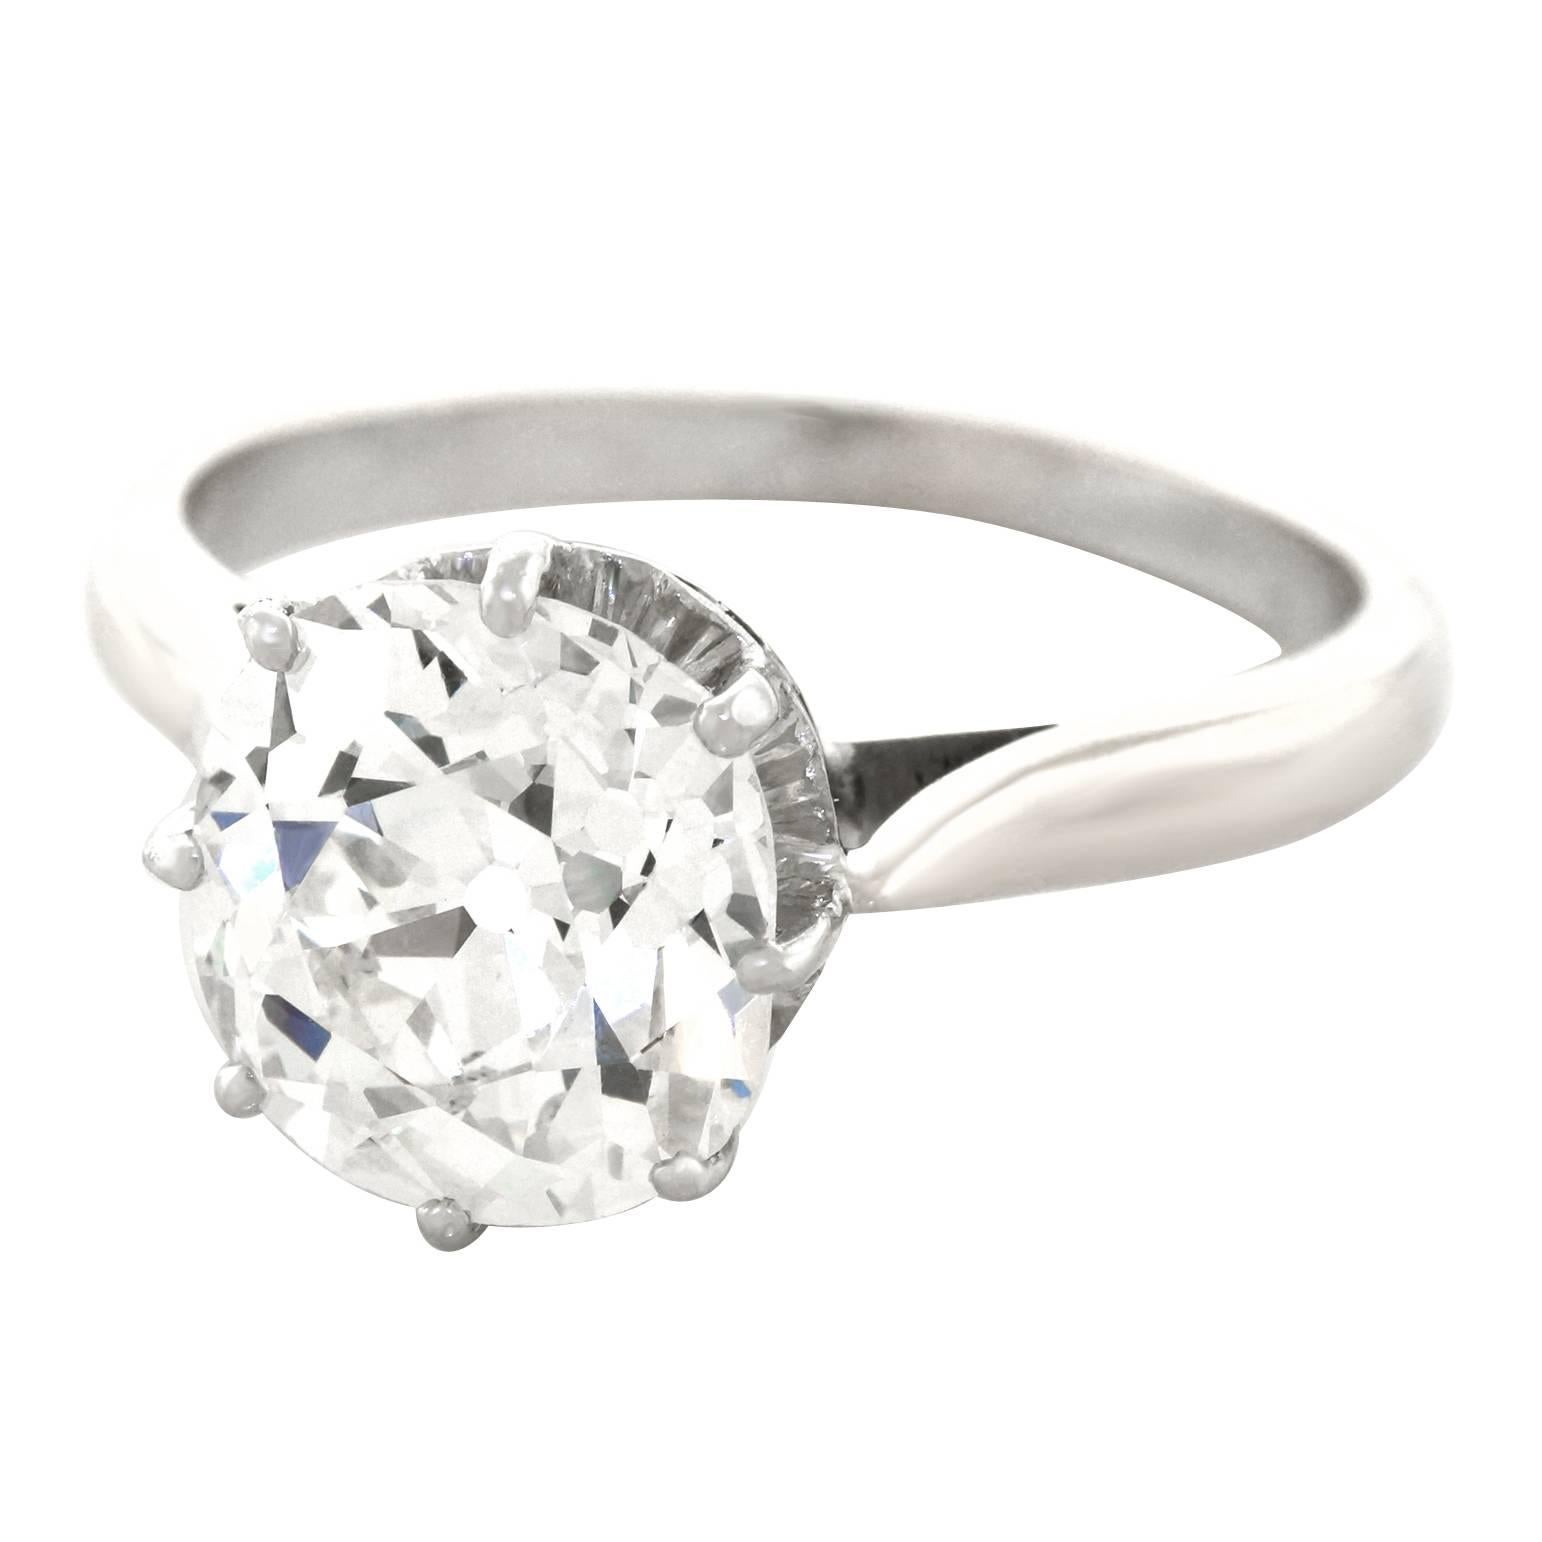 Superb 3.15 Carat Art Deco Diamond Ring GIA